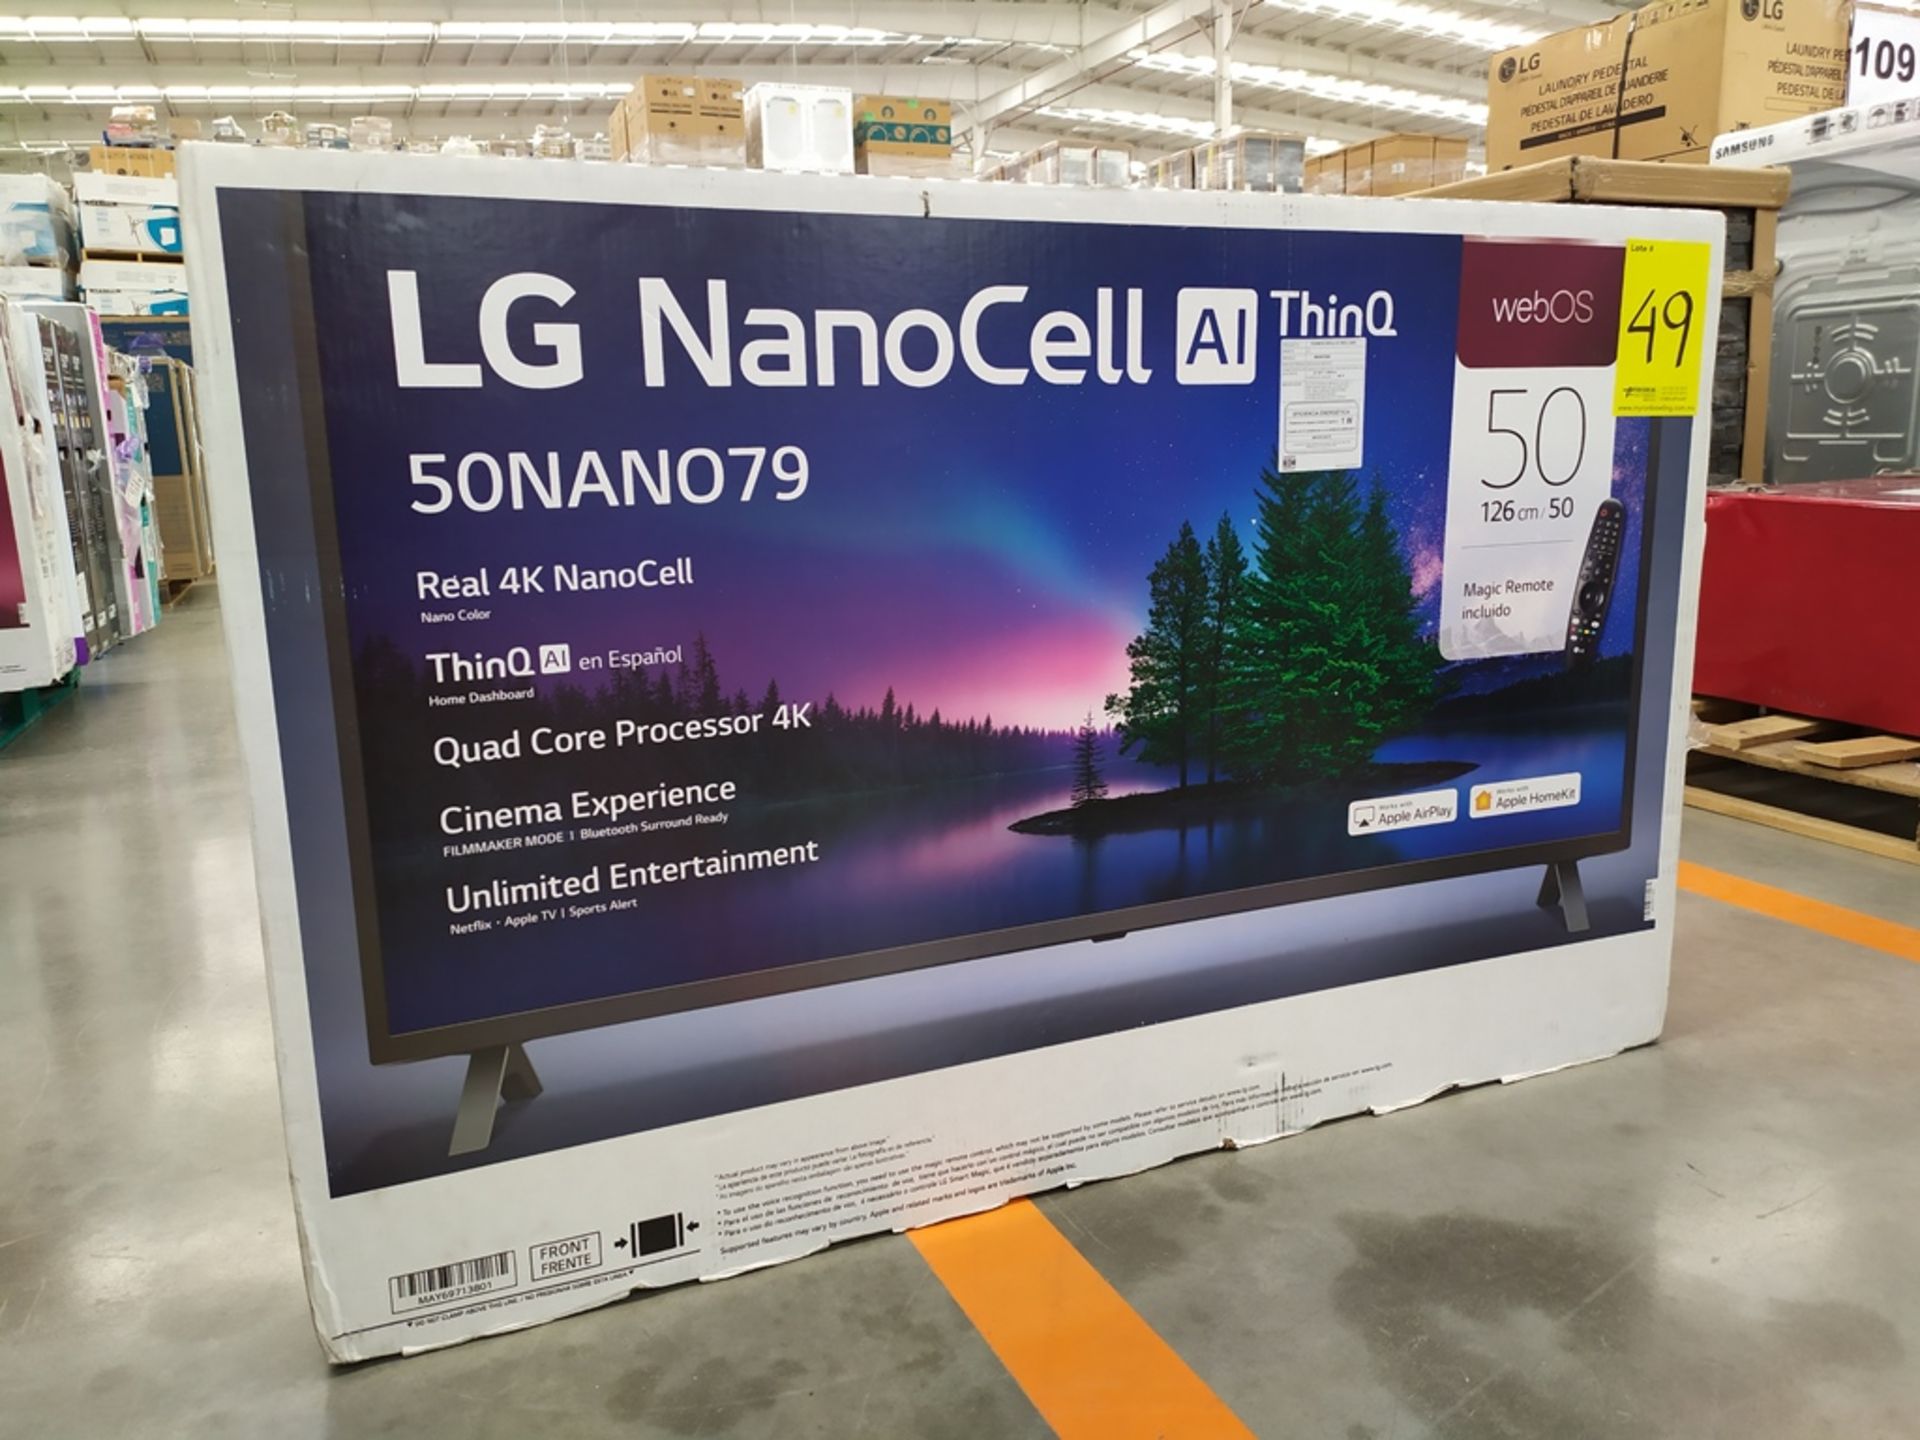 Pantalla Smart TV Marca LG De 50" Nanocell Modelo 50NAN079 No De Serie 104MXLS40960 - Image 6 of 9